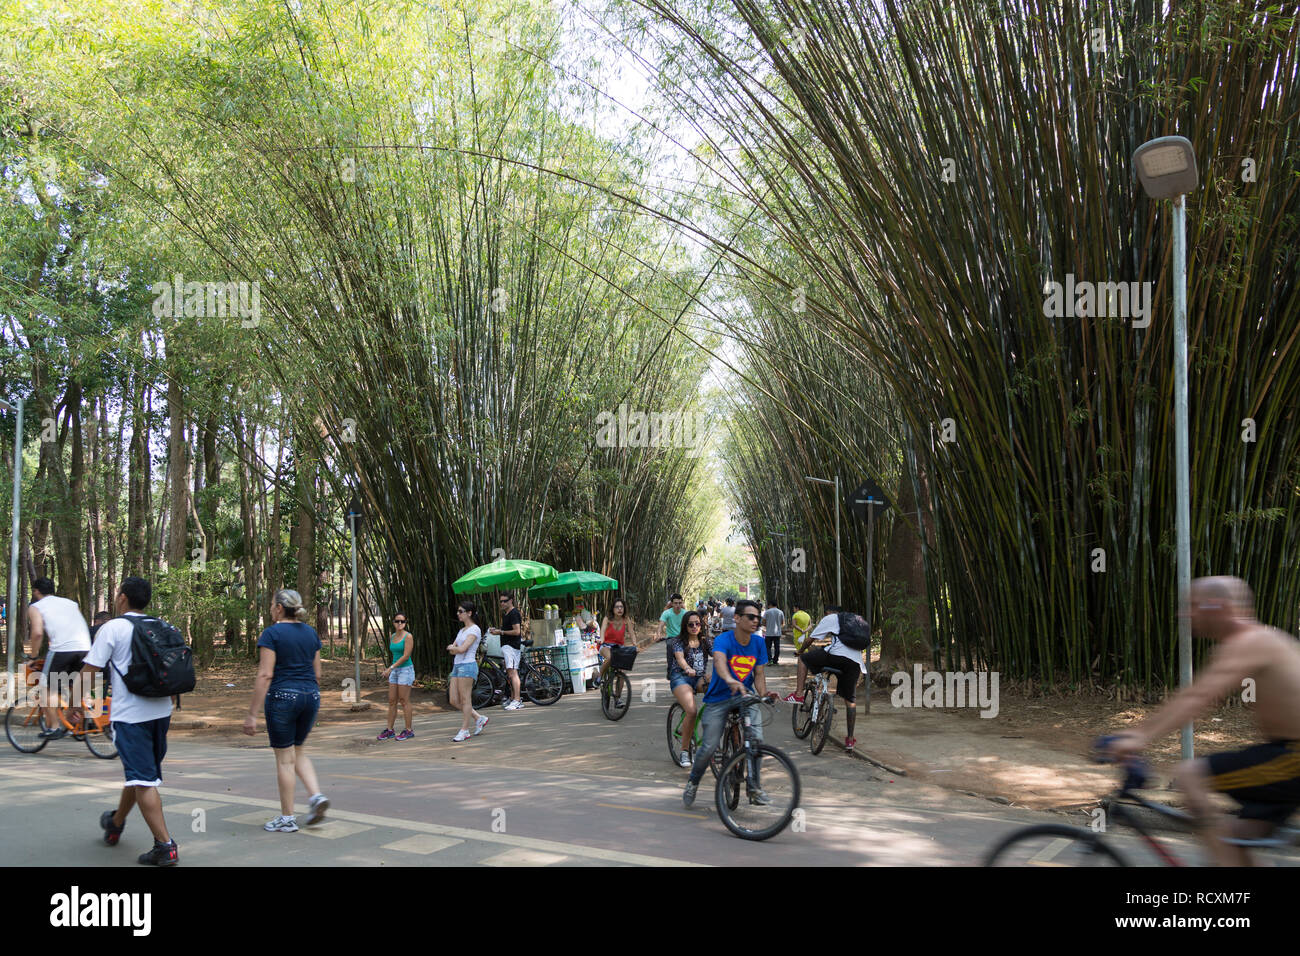 People enjoy walking, biking, cycling. Passersby on bike passing by, through bamboo grove, Parque Ibirapuera, Sao Paulo, Brazil Stock Photo